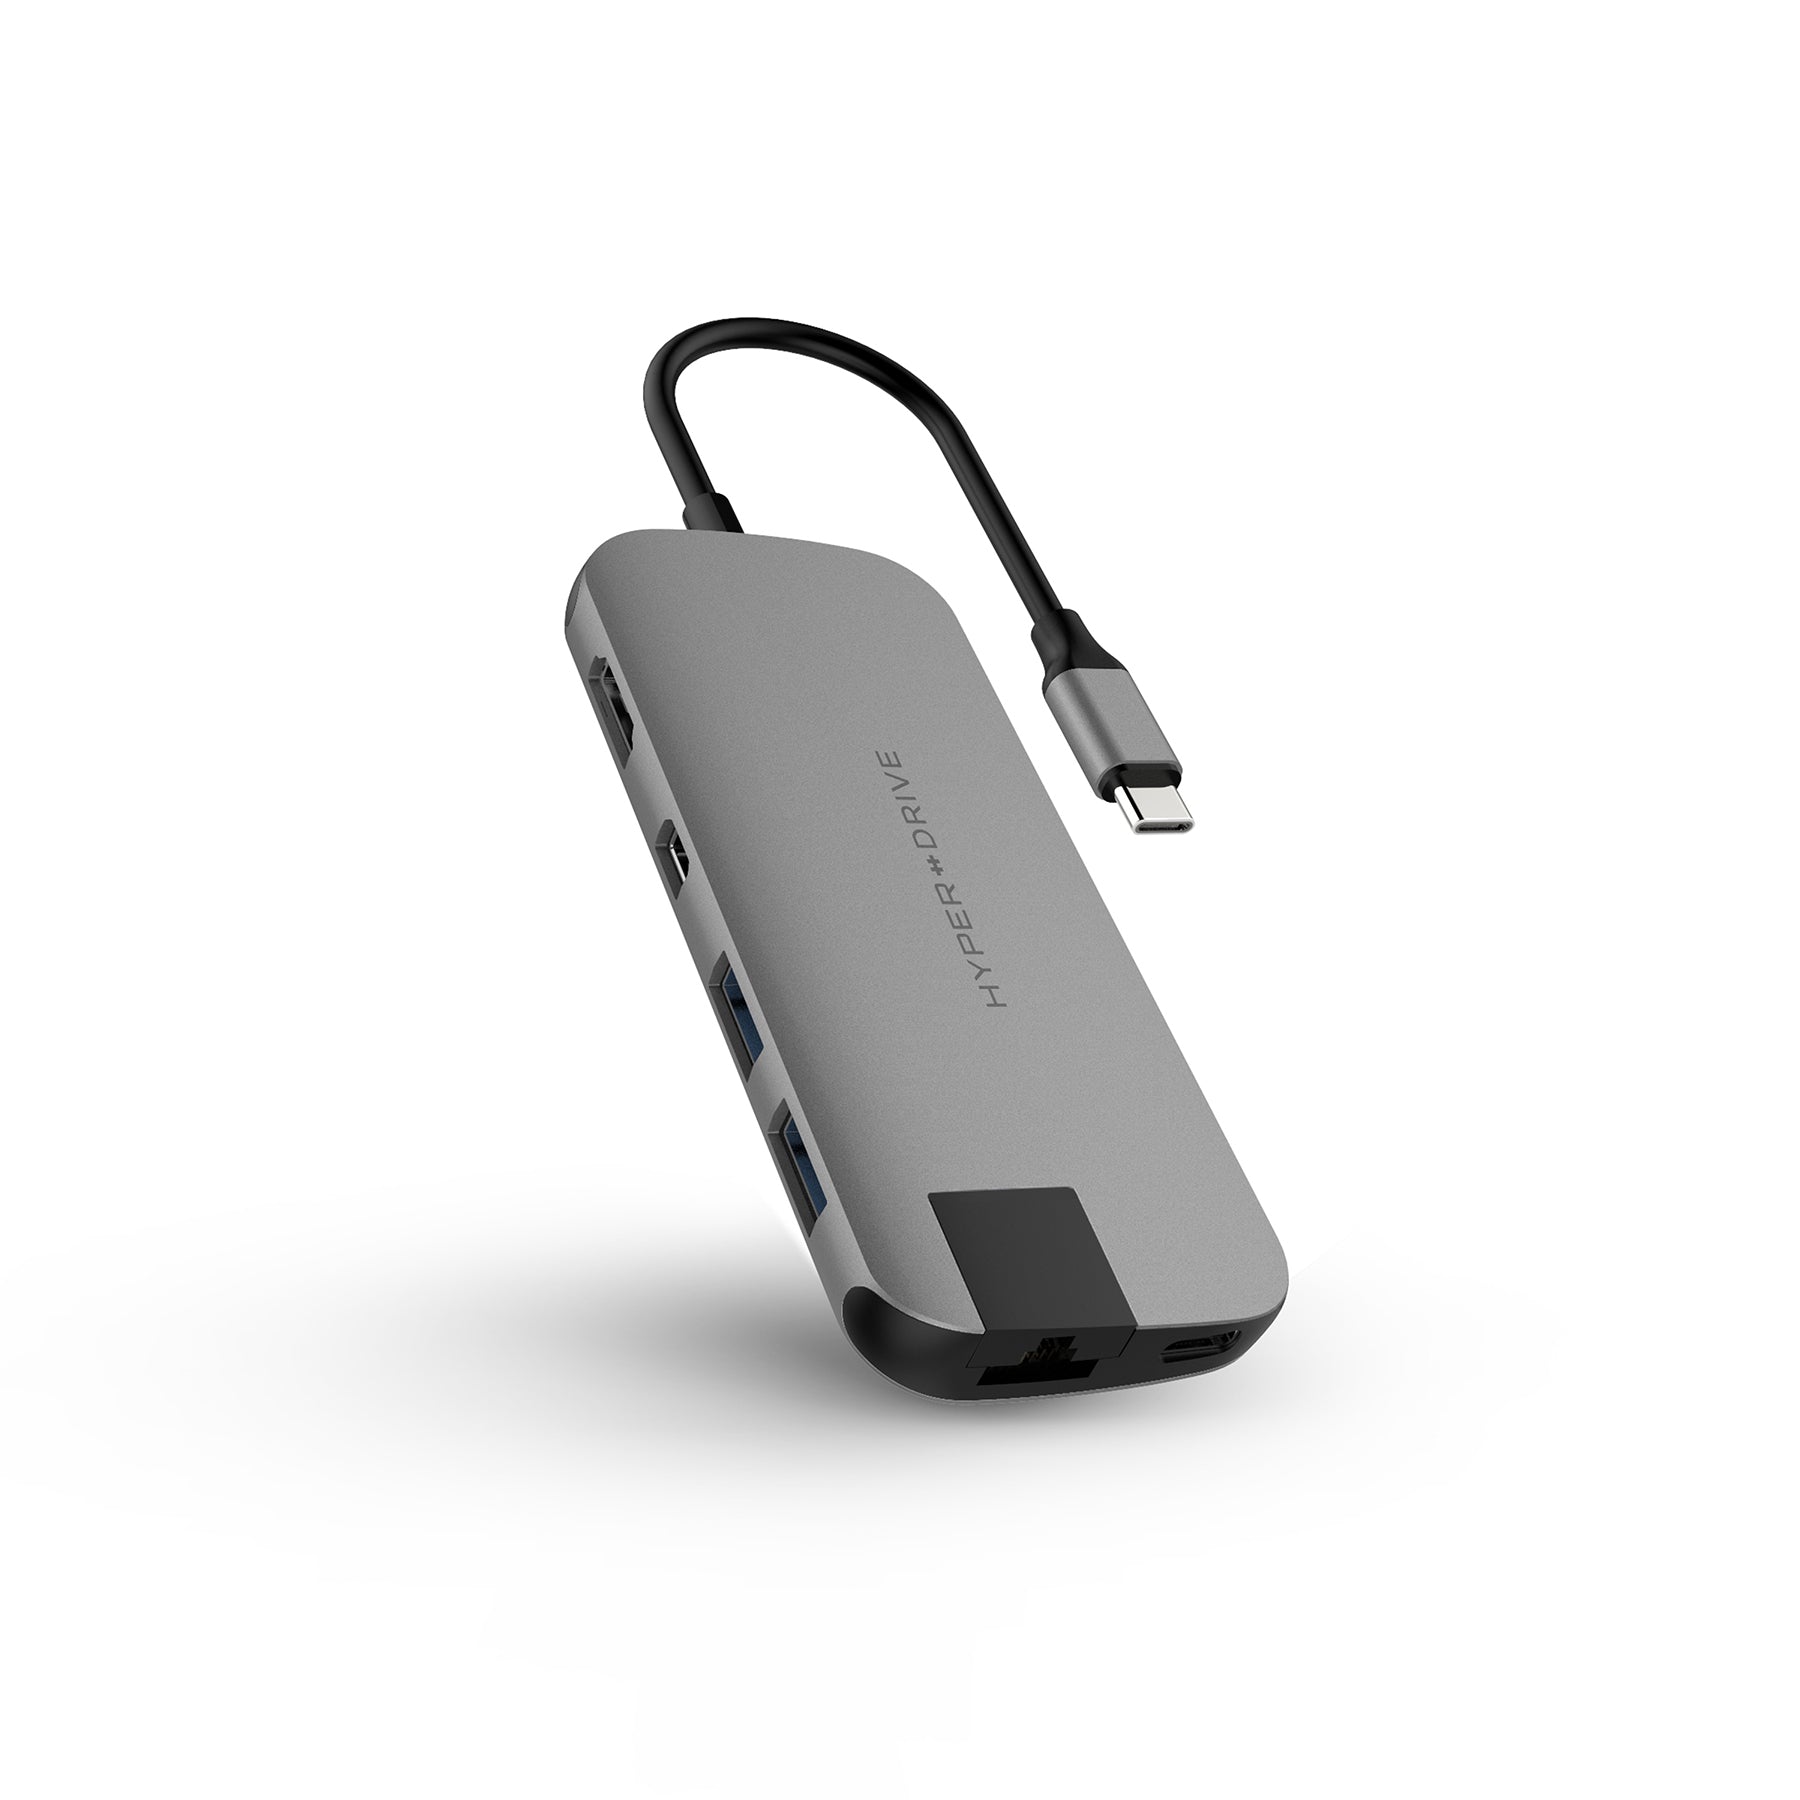 HyperDrive SLAB 7-in-1 USB-C Hub –